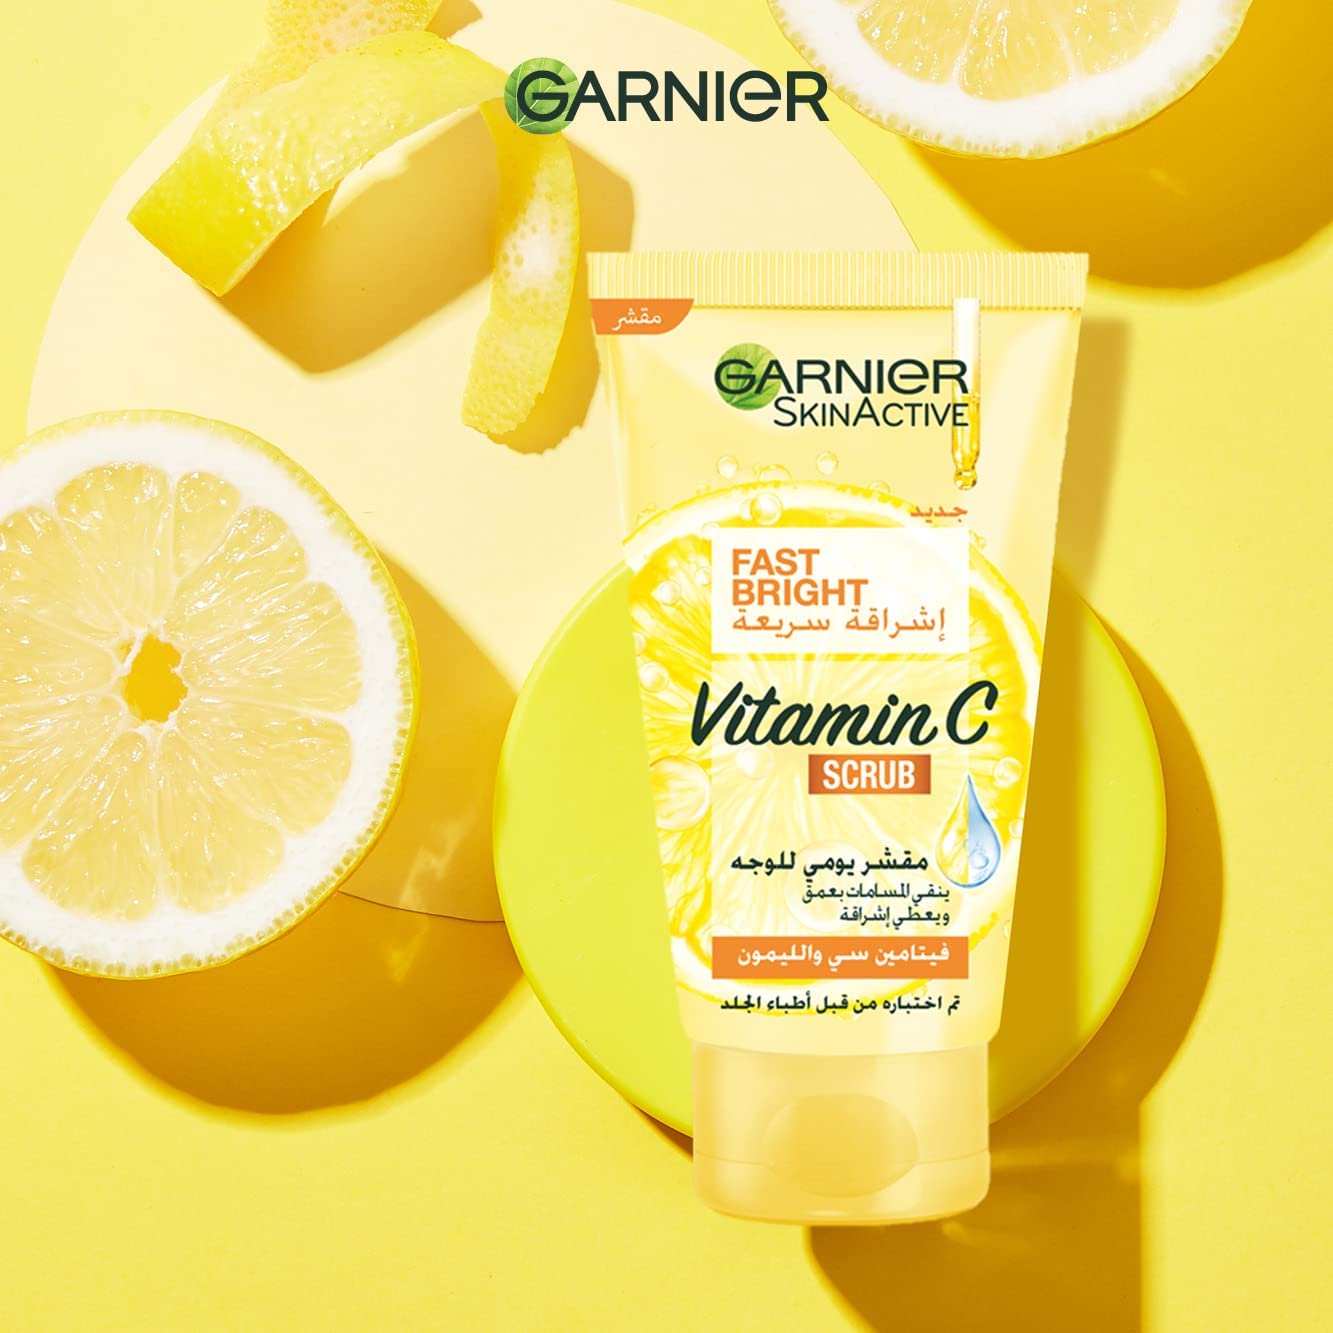 Garnier Fast Bright Vitamin C Daily Scrub – 150ml Skin Care